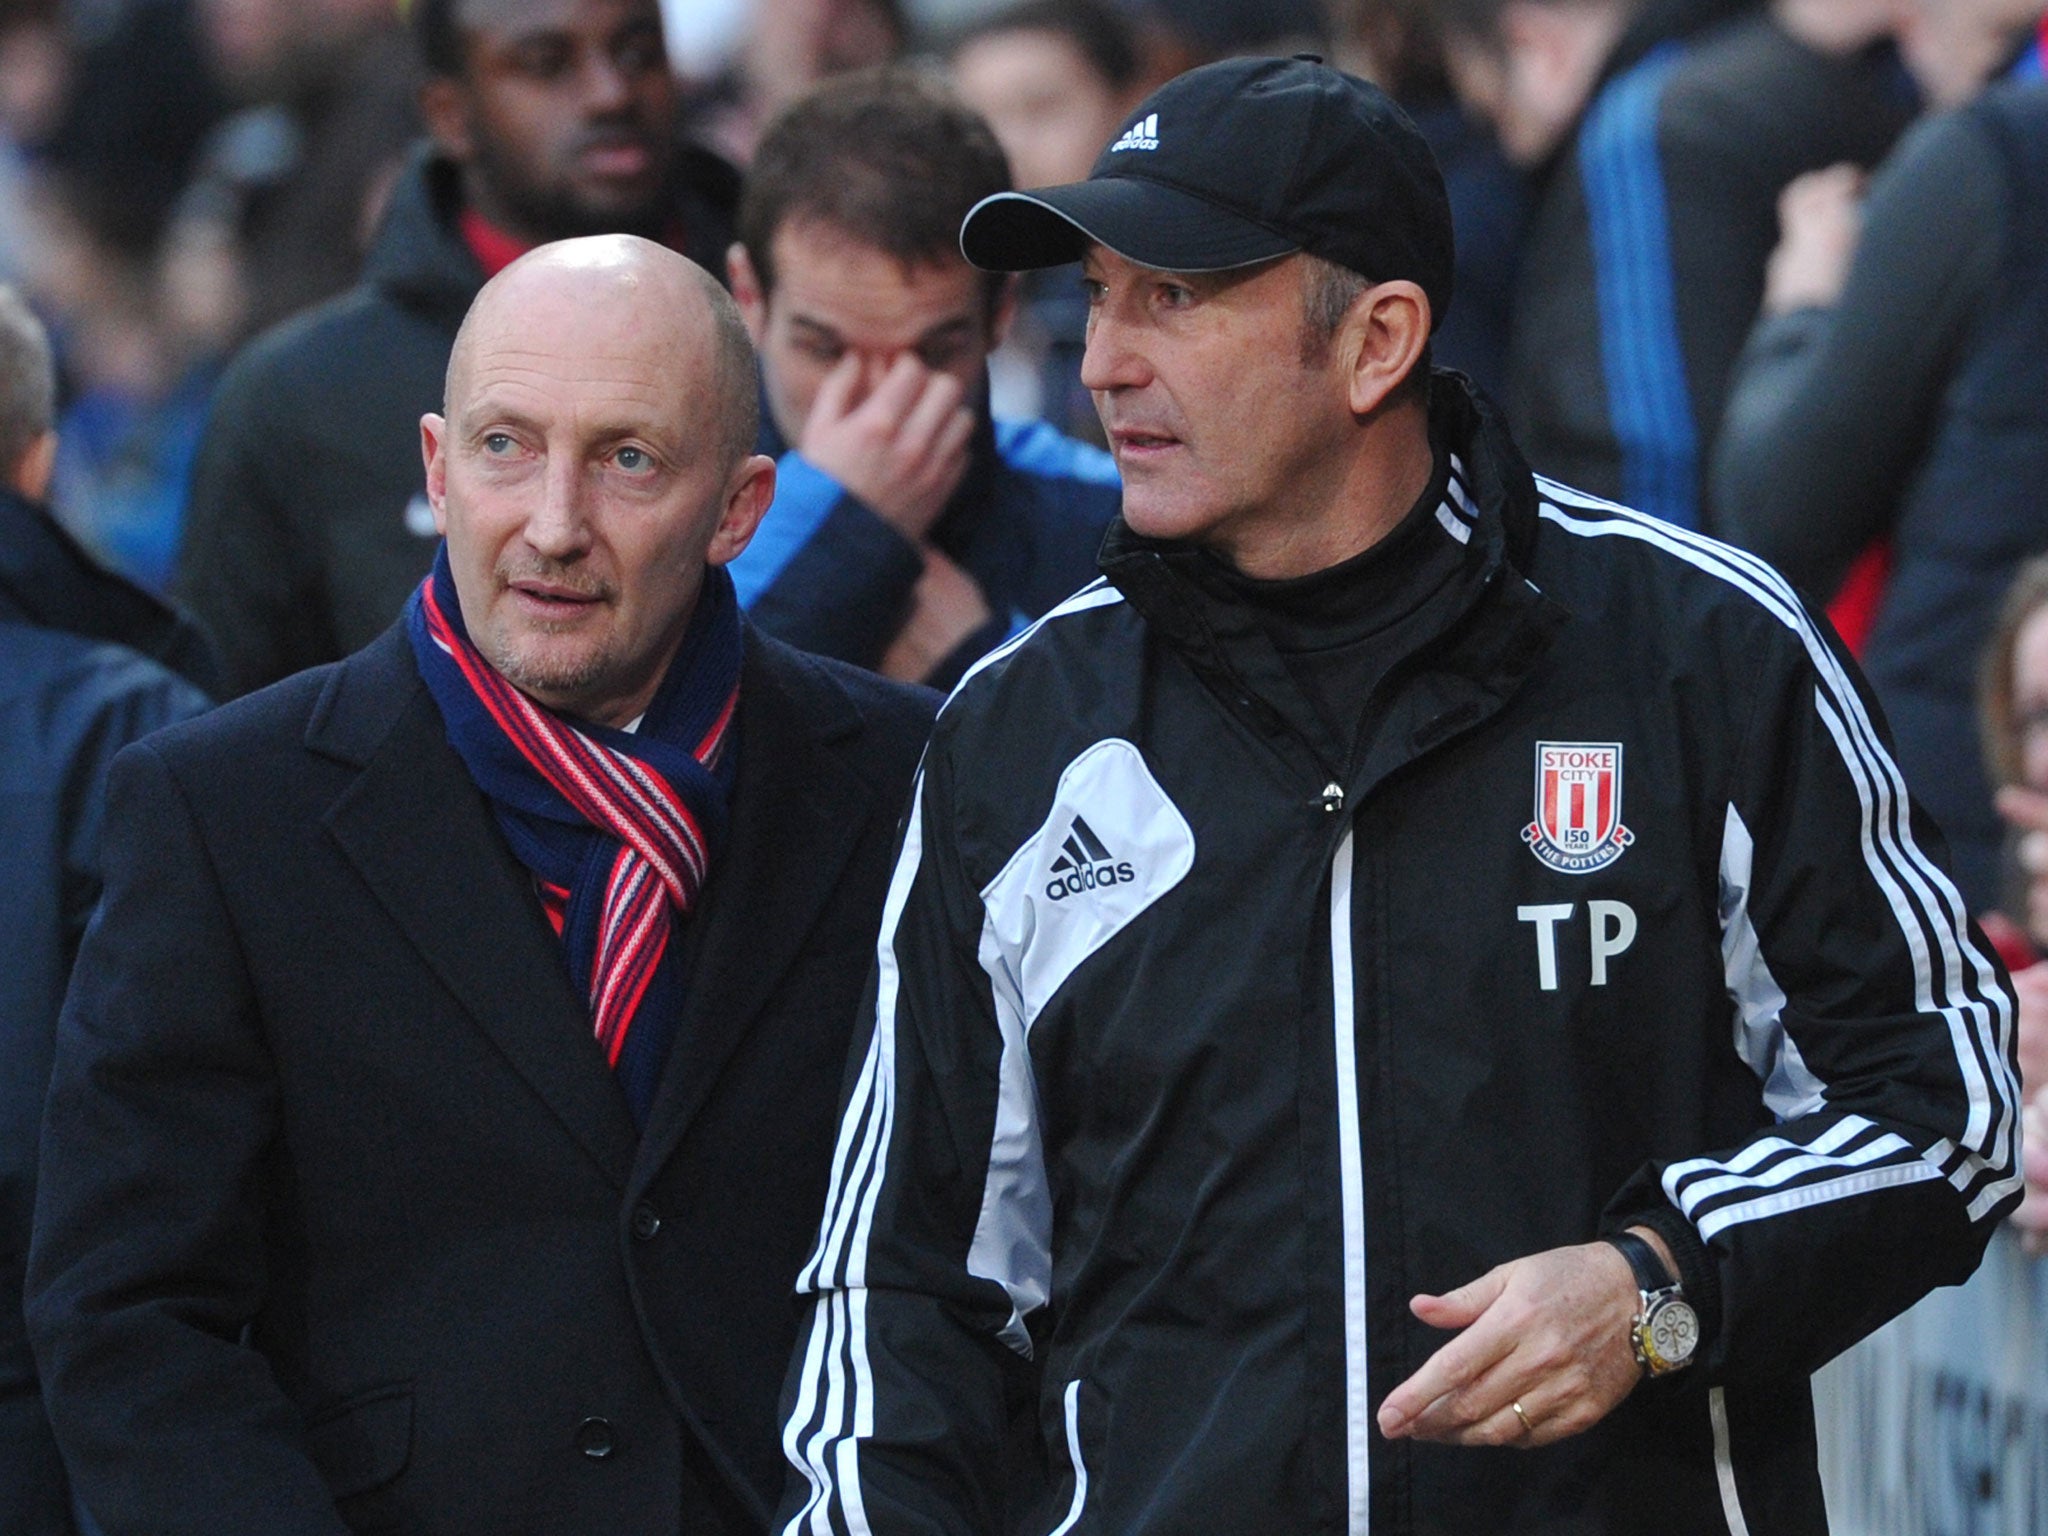 Crystal Palace's former manager Ian Holloway talks with Tony Pulis